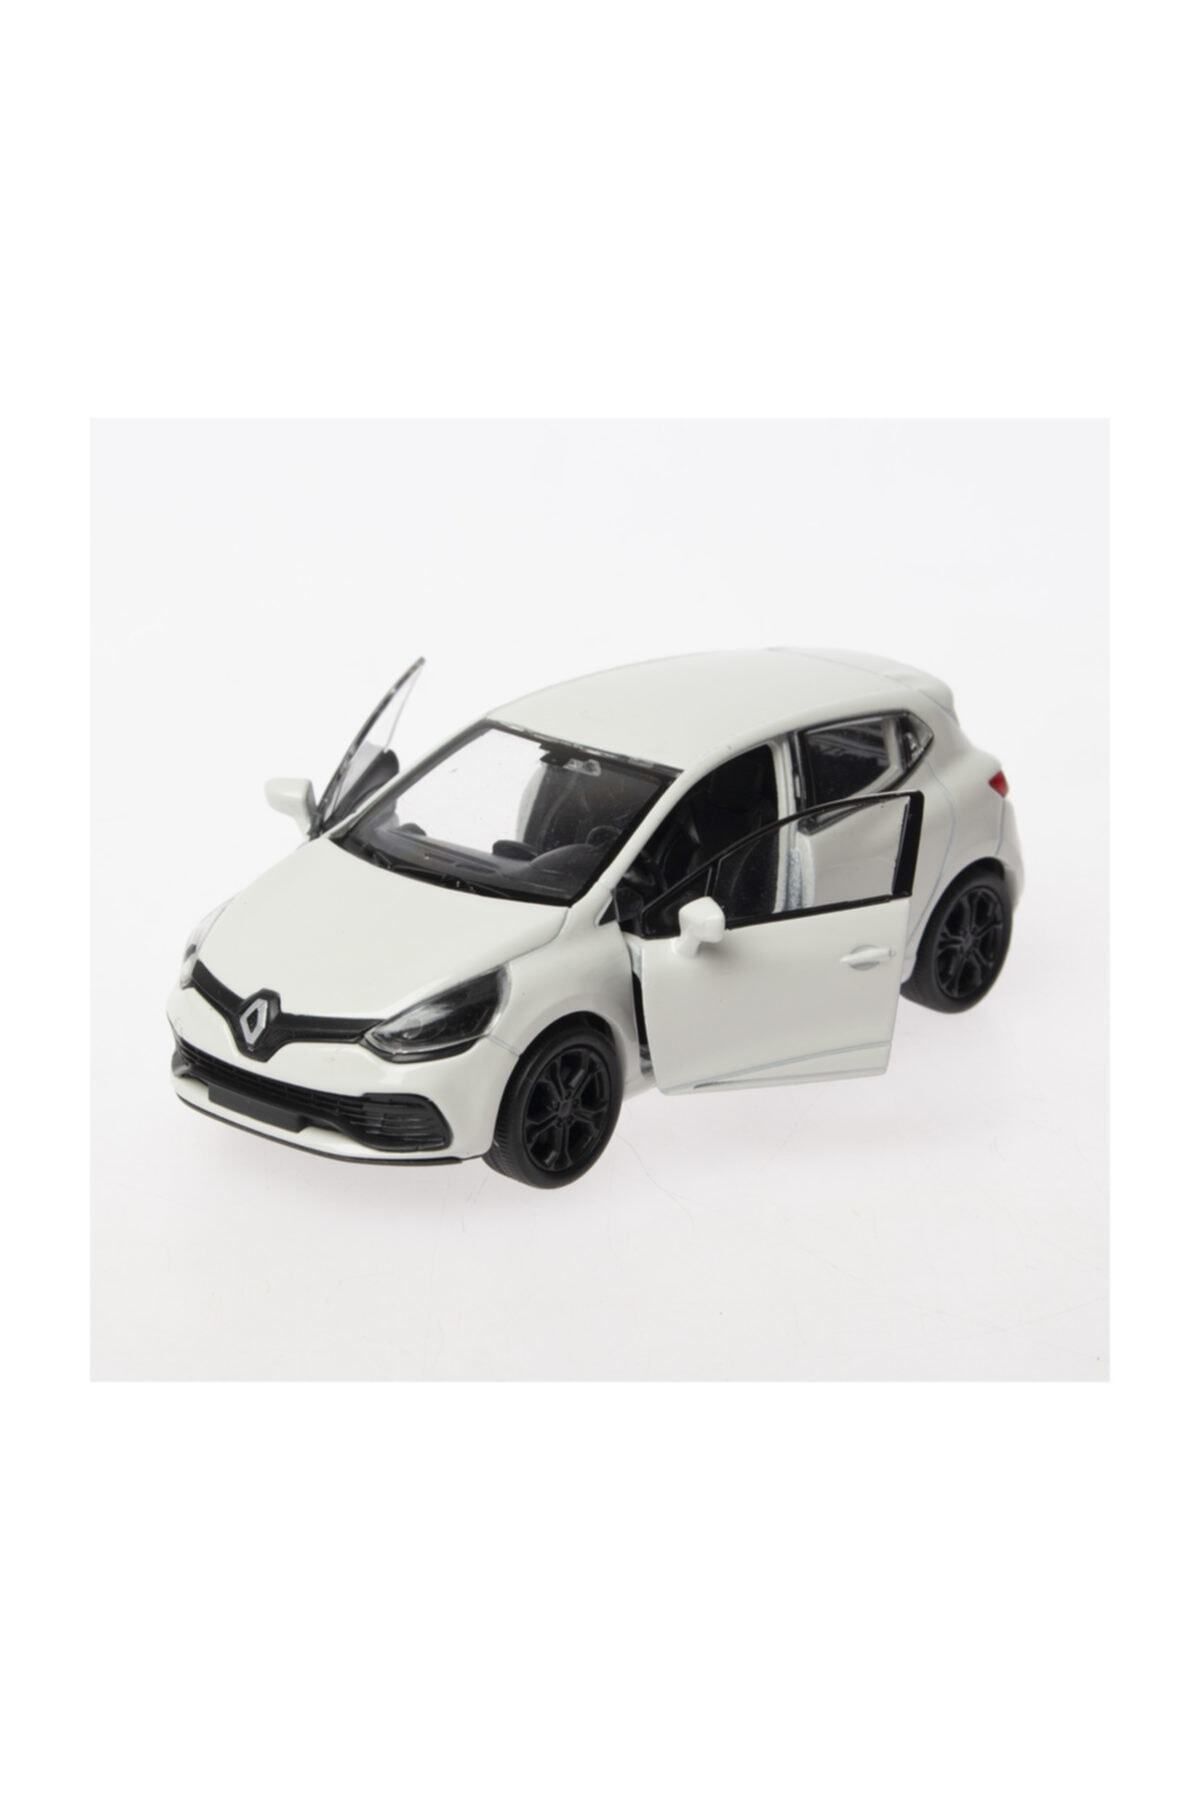 WELLY 1:36 Ölçek Diecast   Renault Clio Rs -Beyaz